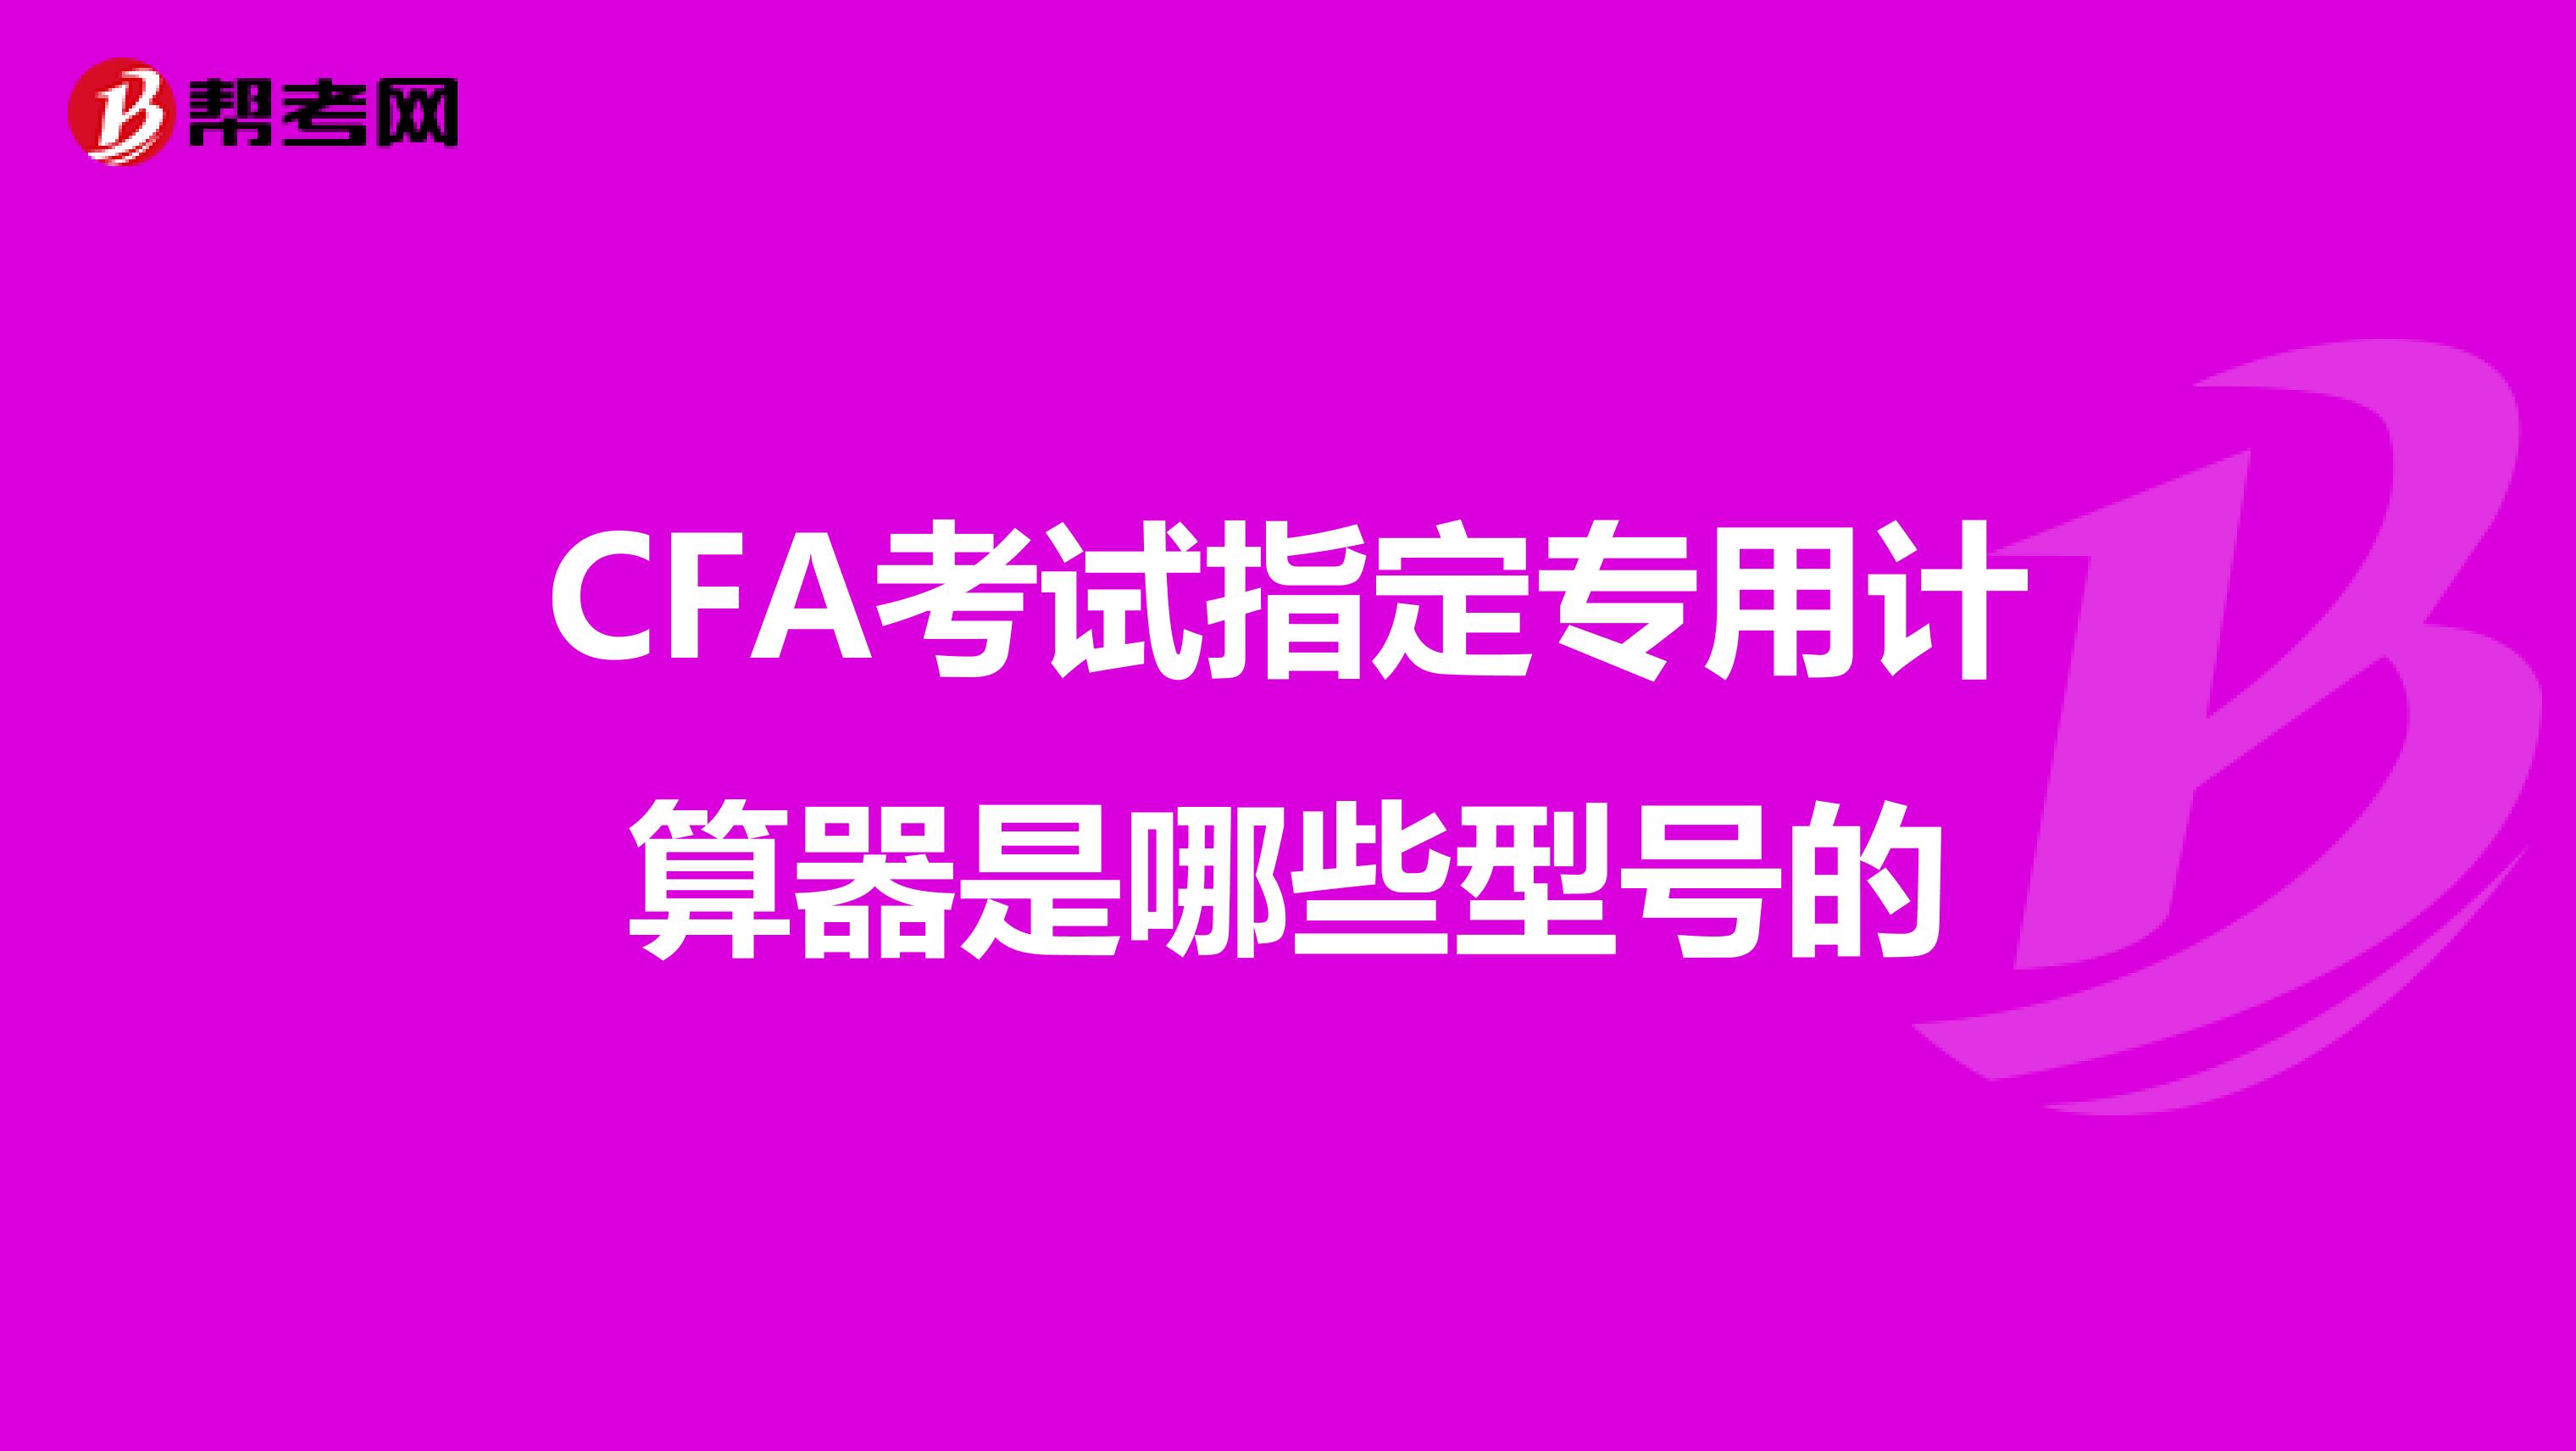 CFA考试指定专用计算器是哪些型号的